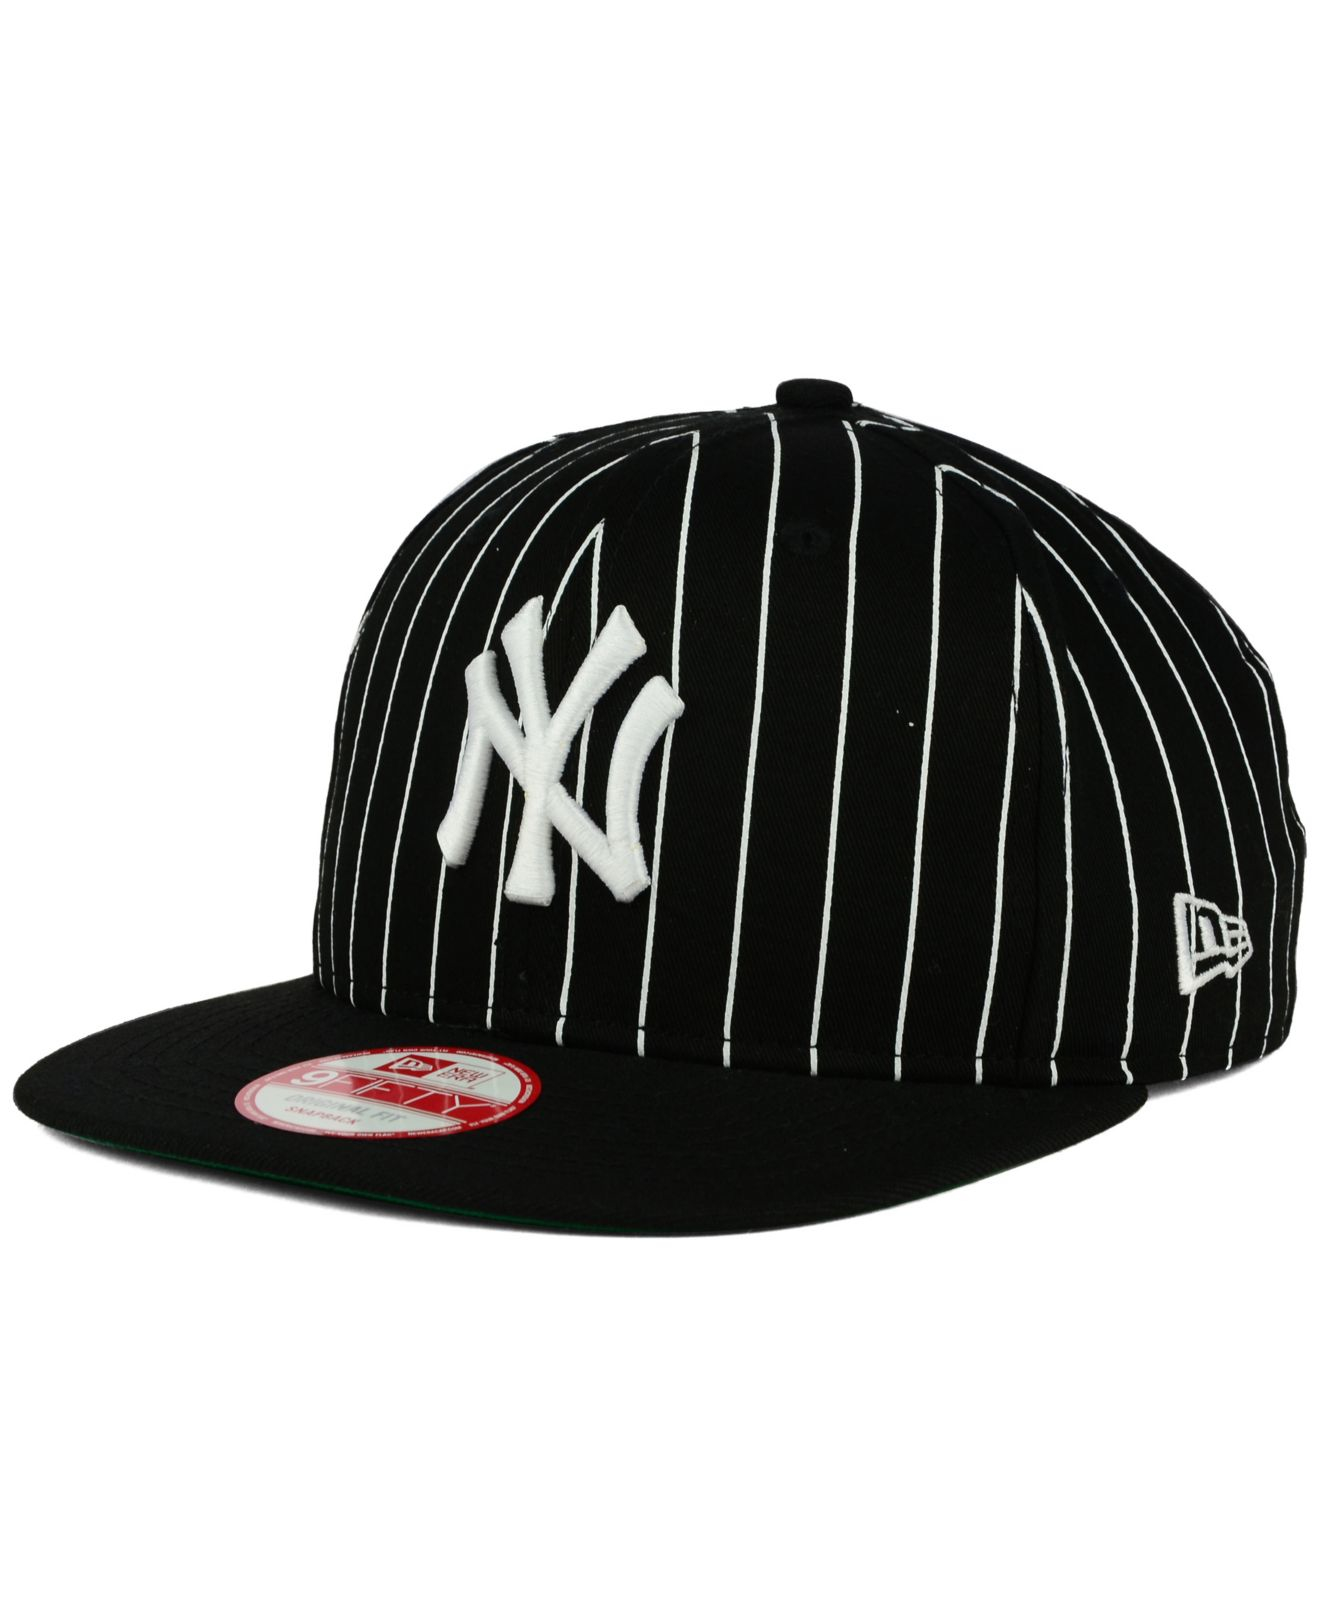 KTZ New York Yankees Vintage Pinstripe 9fifty Snapback Cap in Black for Men